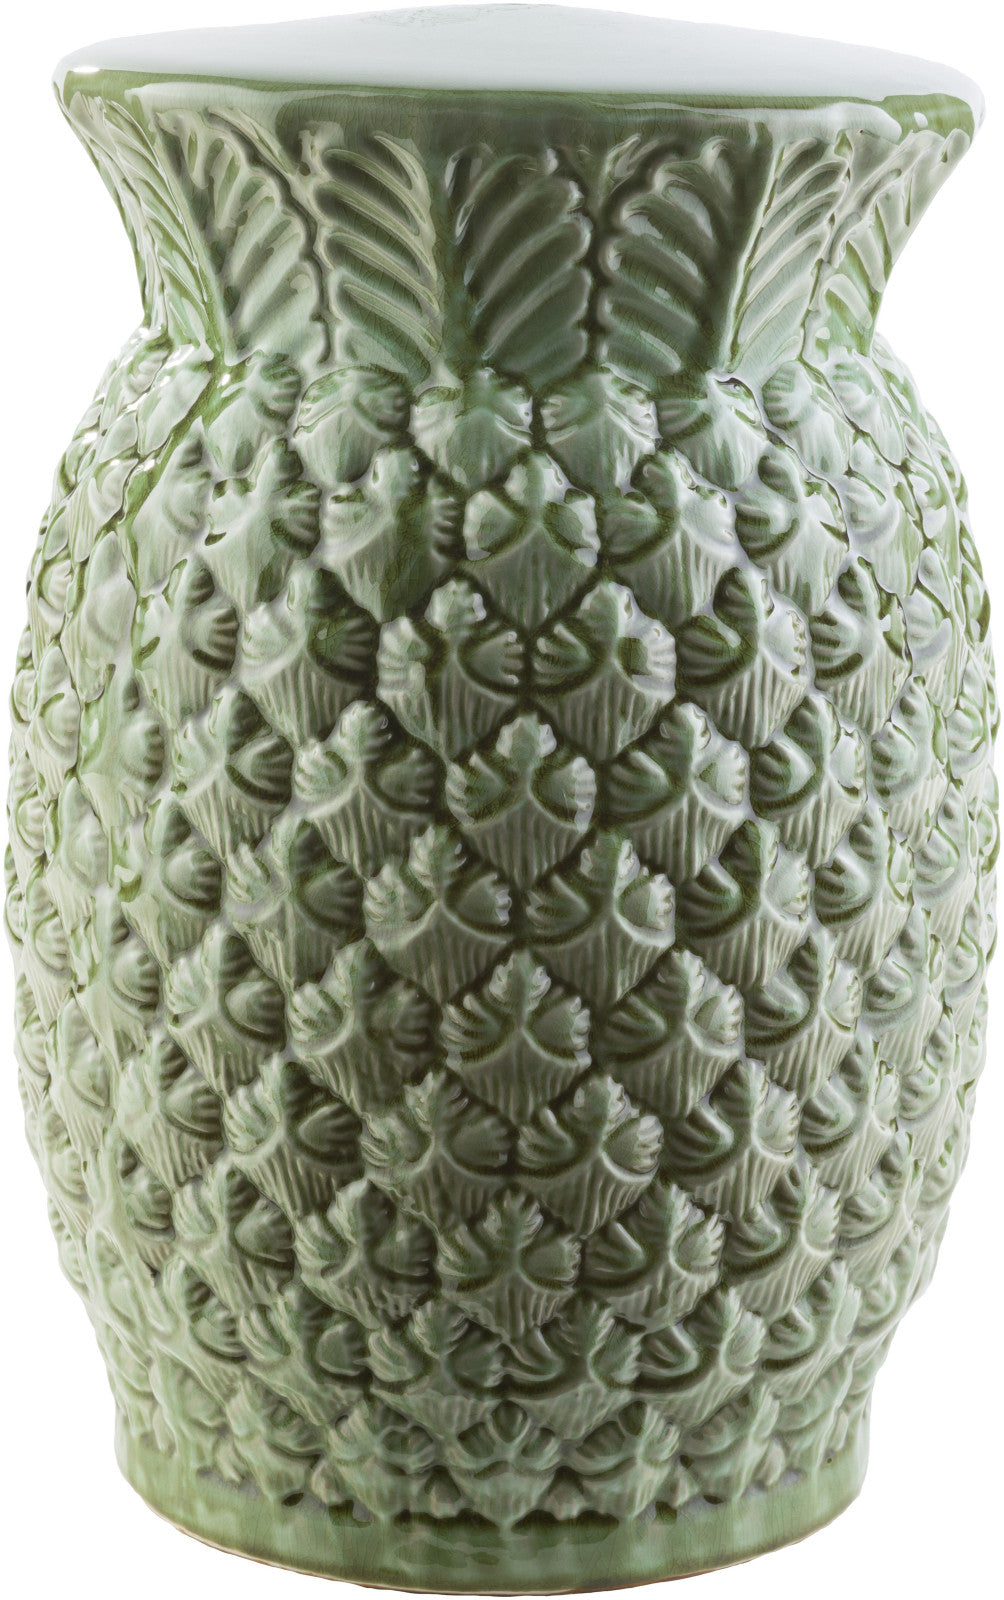 Surya Palm PAA-875 Vase Stool 12.6 X 12.6 X 18.5 inches